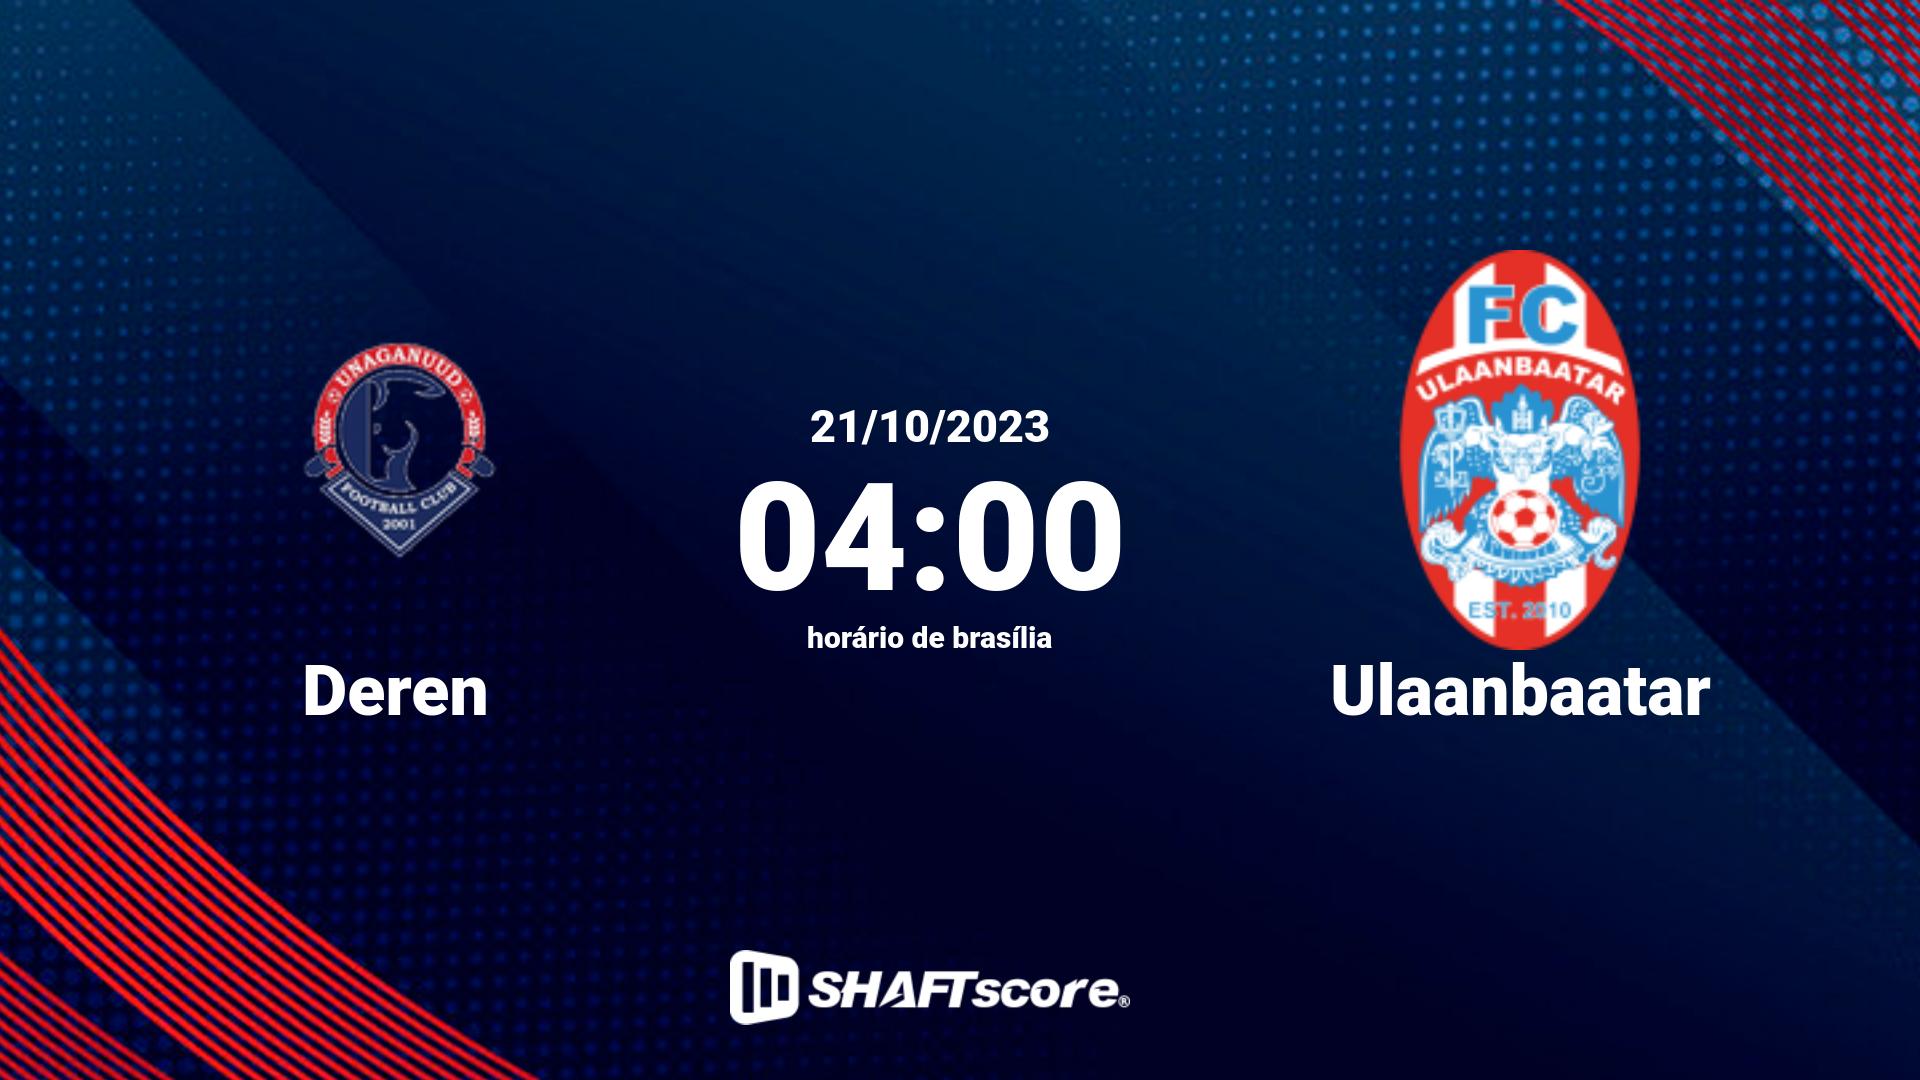 Estatísticas do jogo Deren vs Ulaanbaatar 21.10 04:00